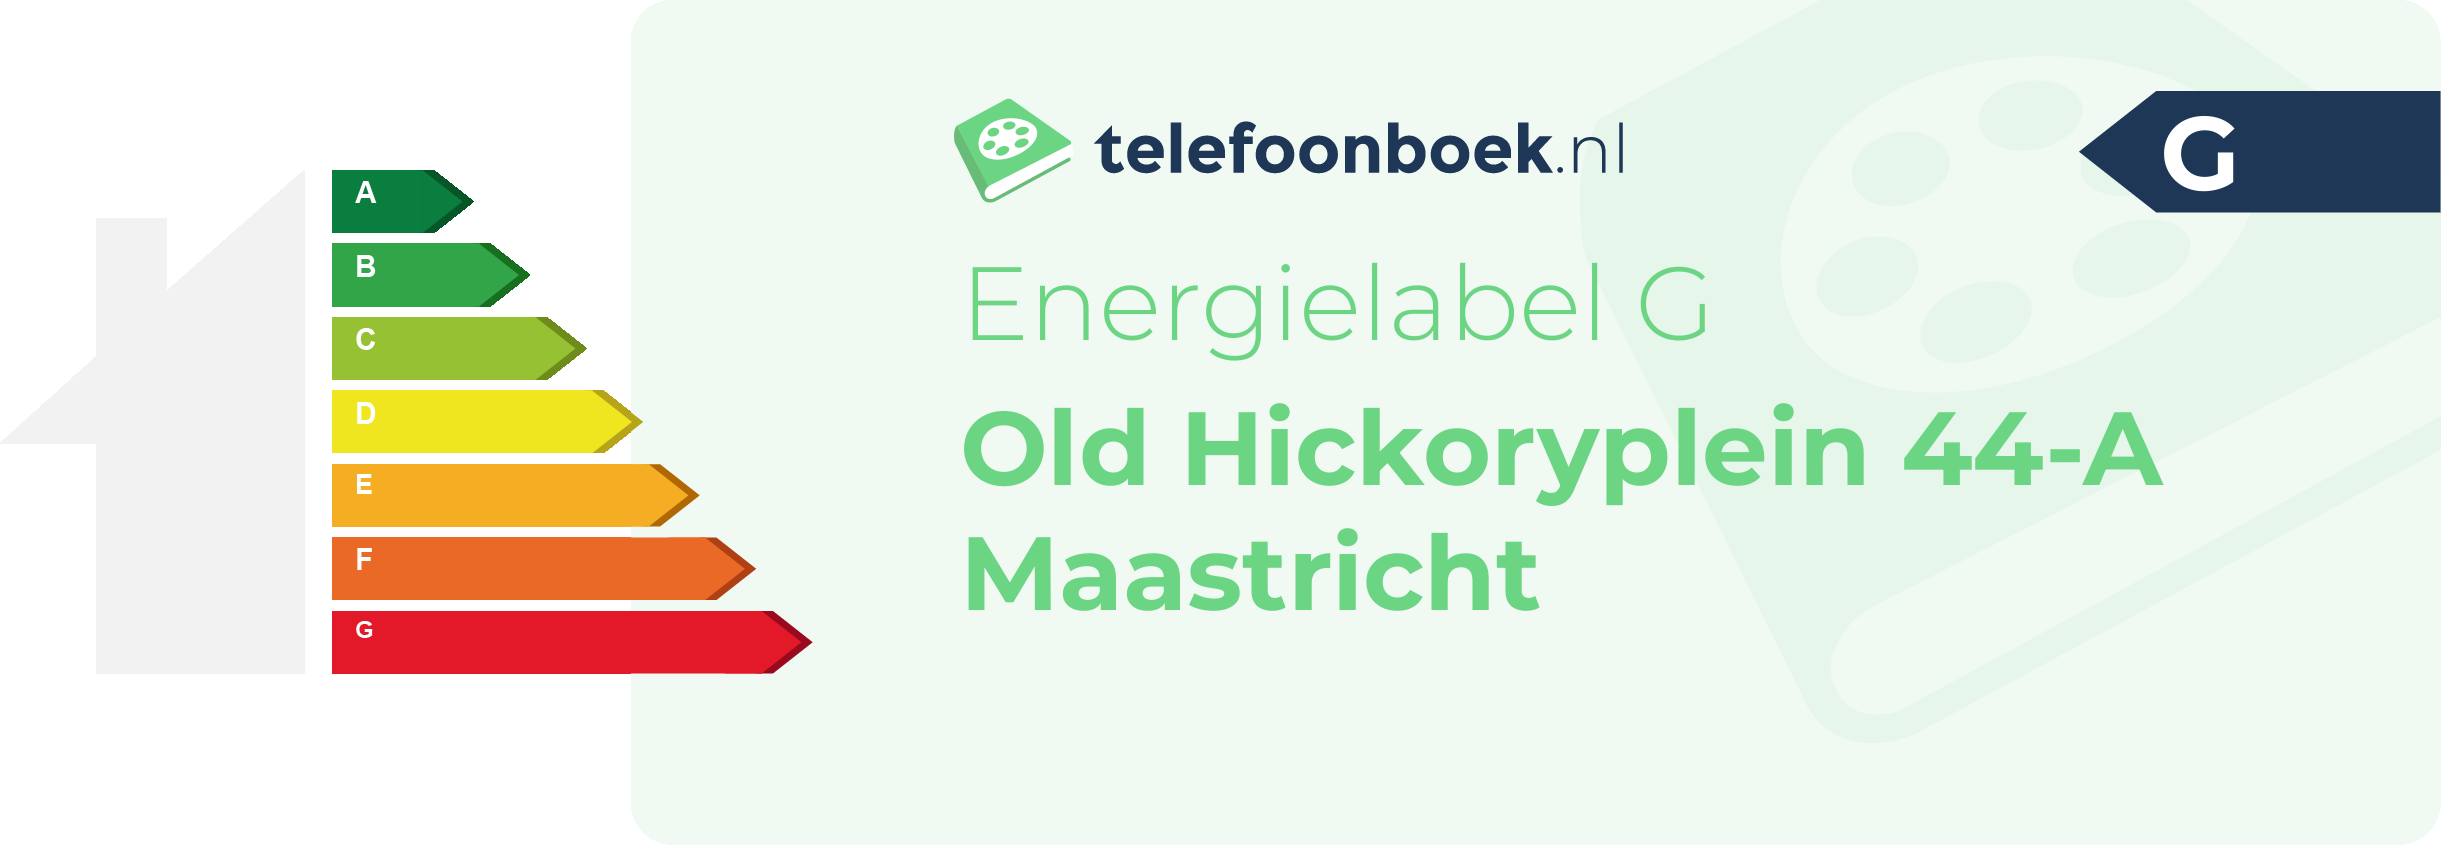 Energielabel Old Hickoryplein 44-A Maastricht